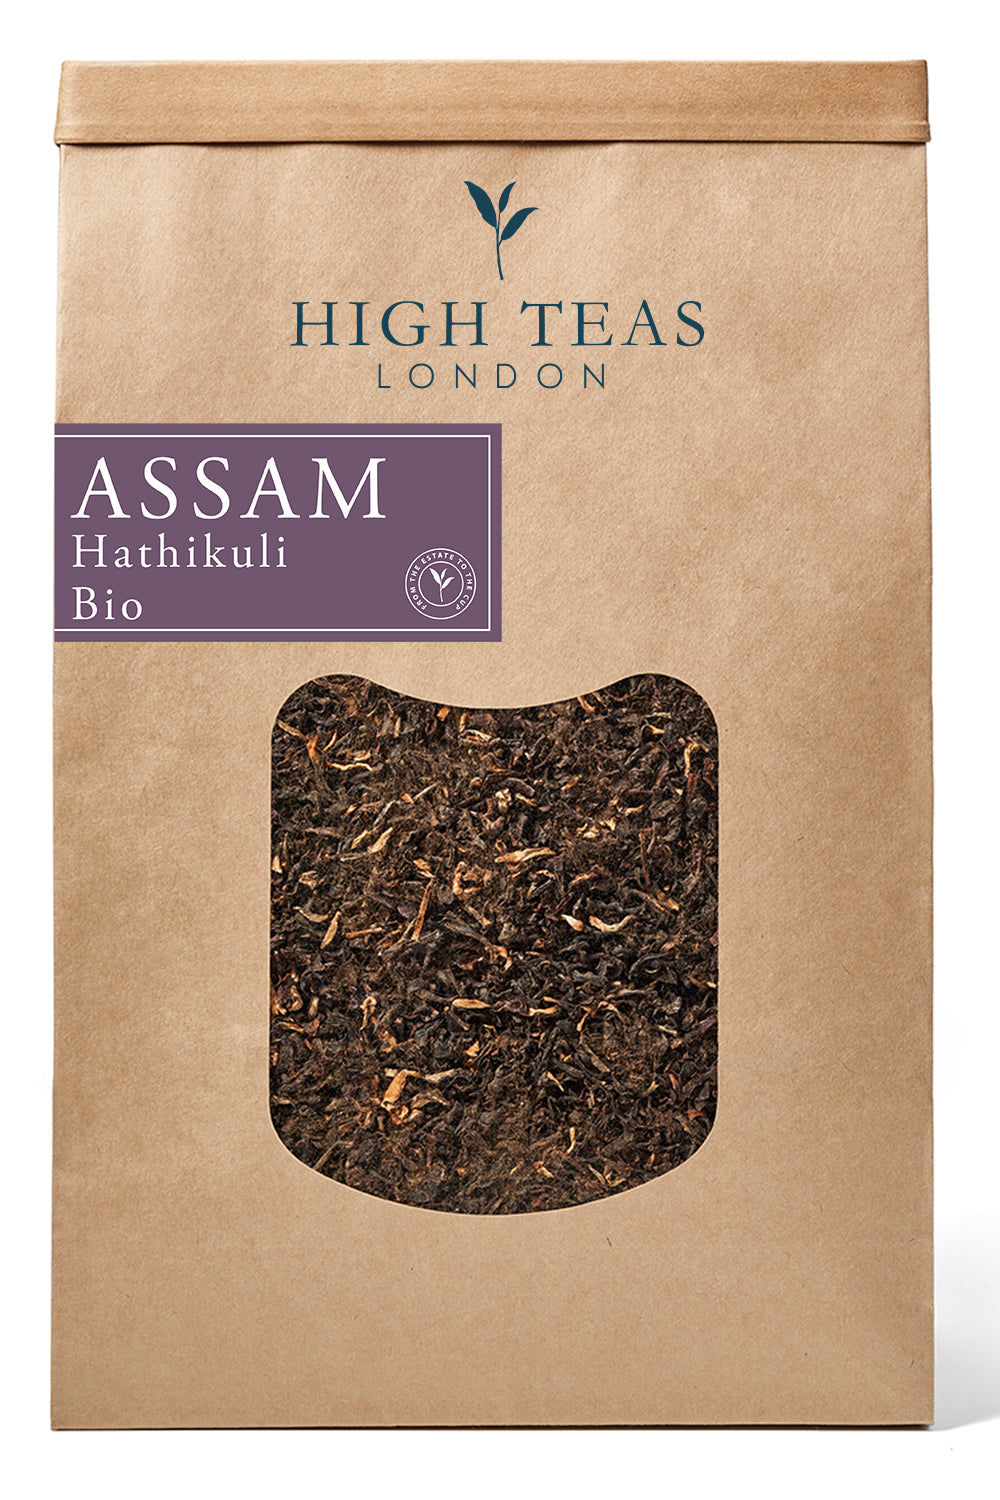 Assam Hathikuli Bio-500g-Loose Leaf Tea-High Teas